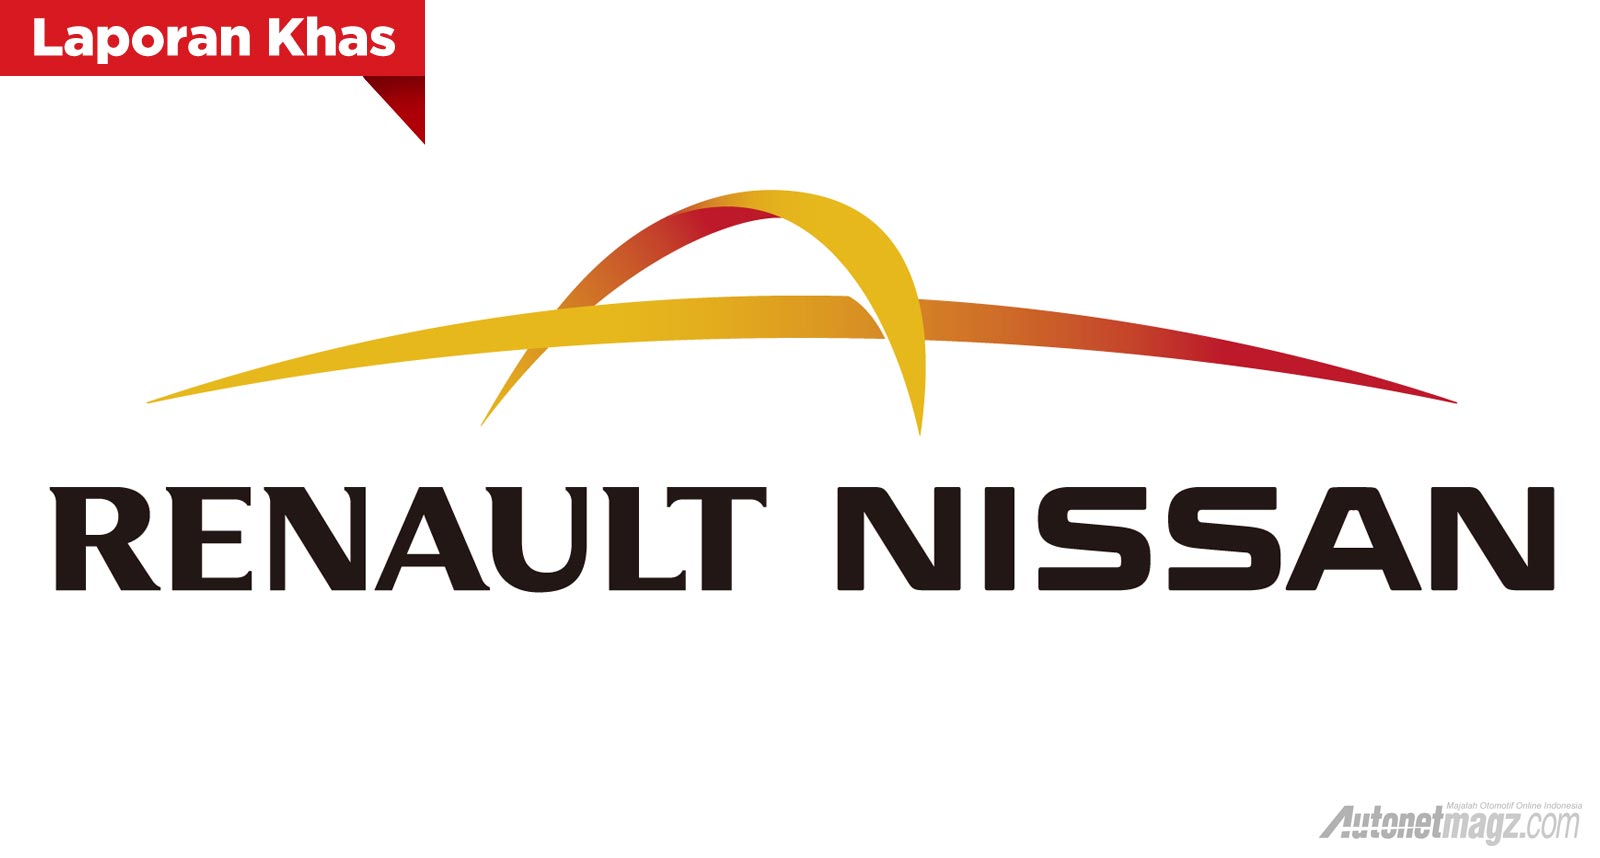 Renault nissan logo download #9